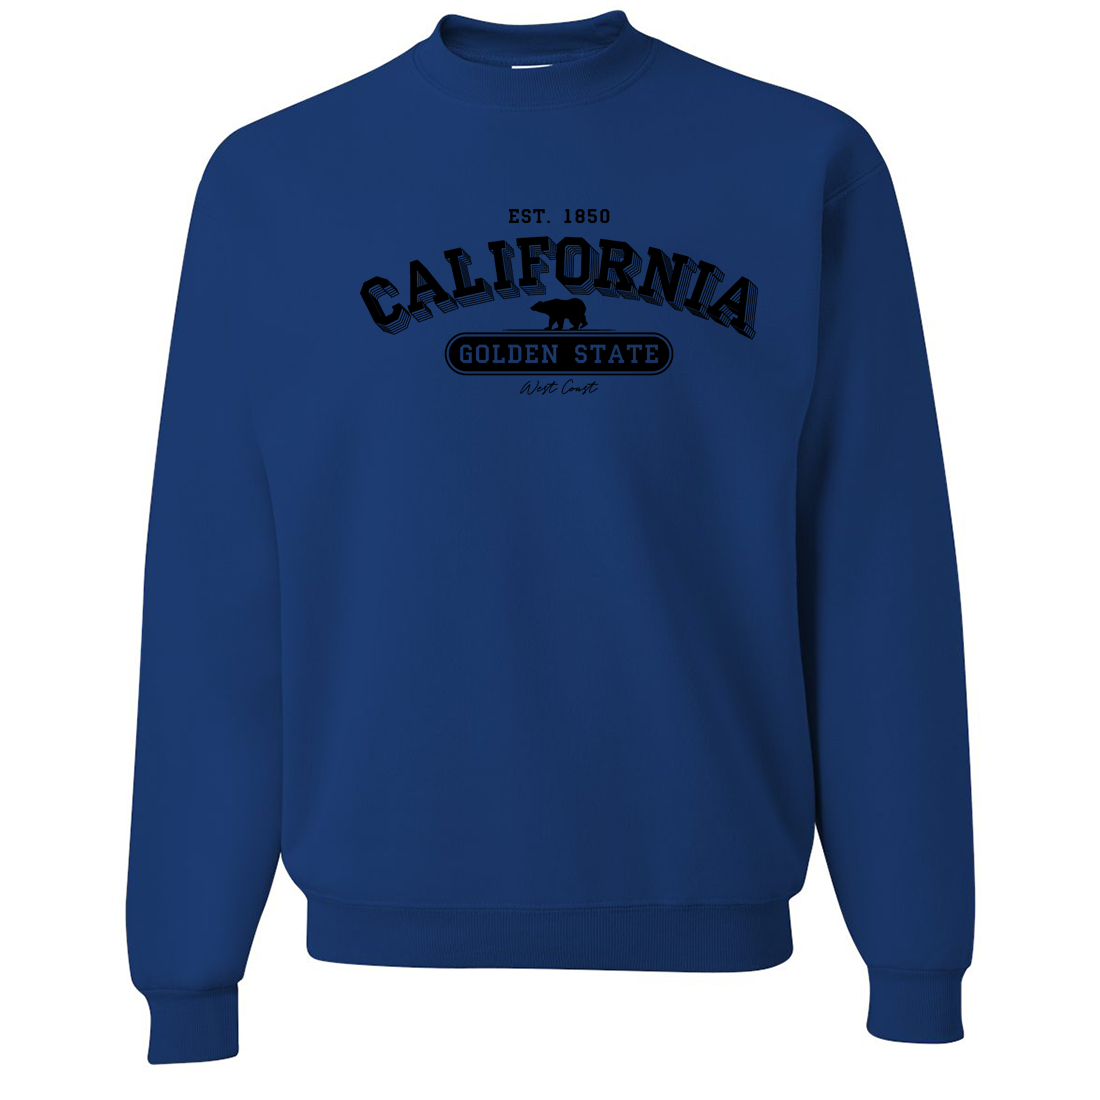 California Golden State 1850 Zip-Up Hoodie - California Republic Clothes